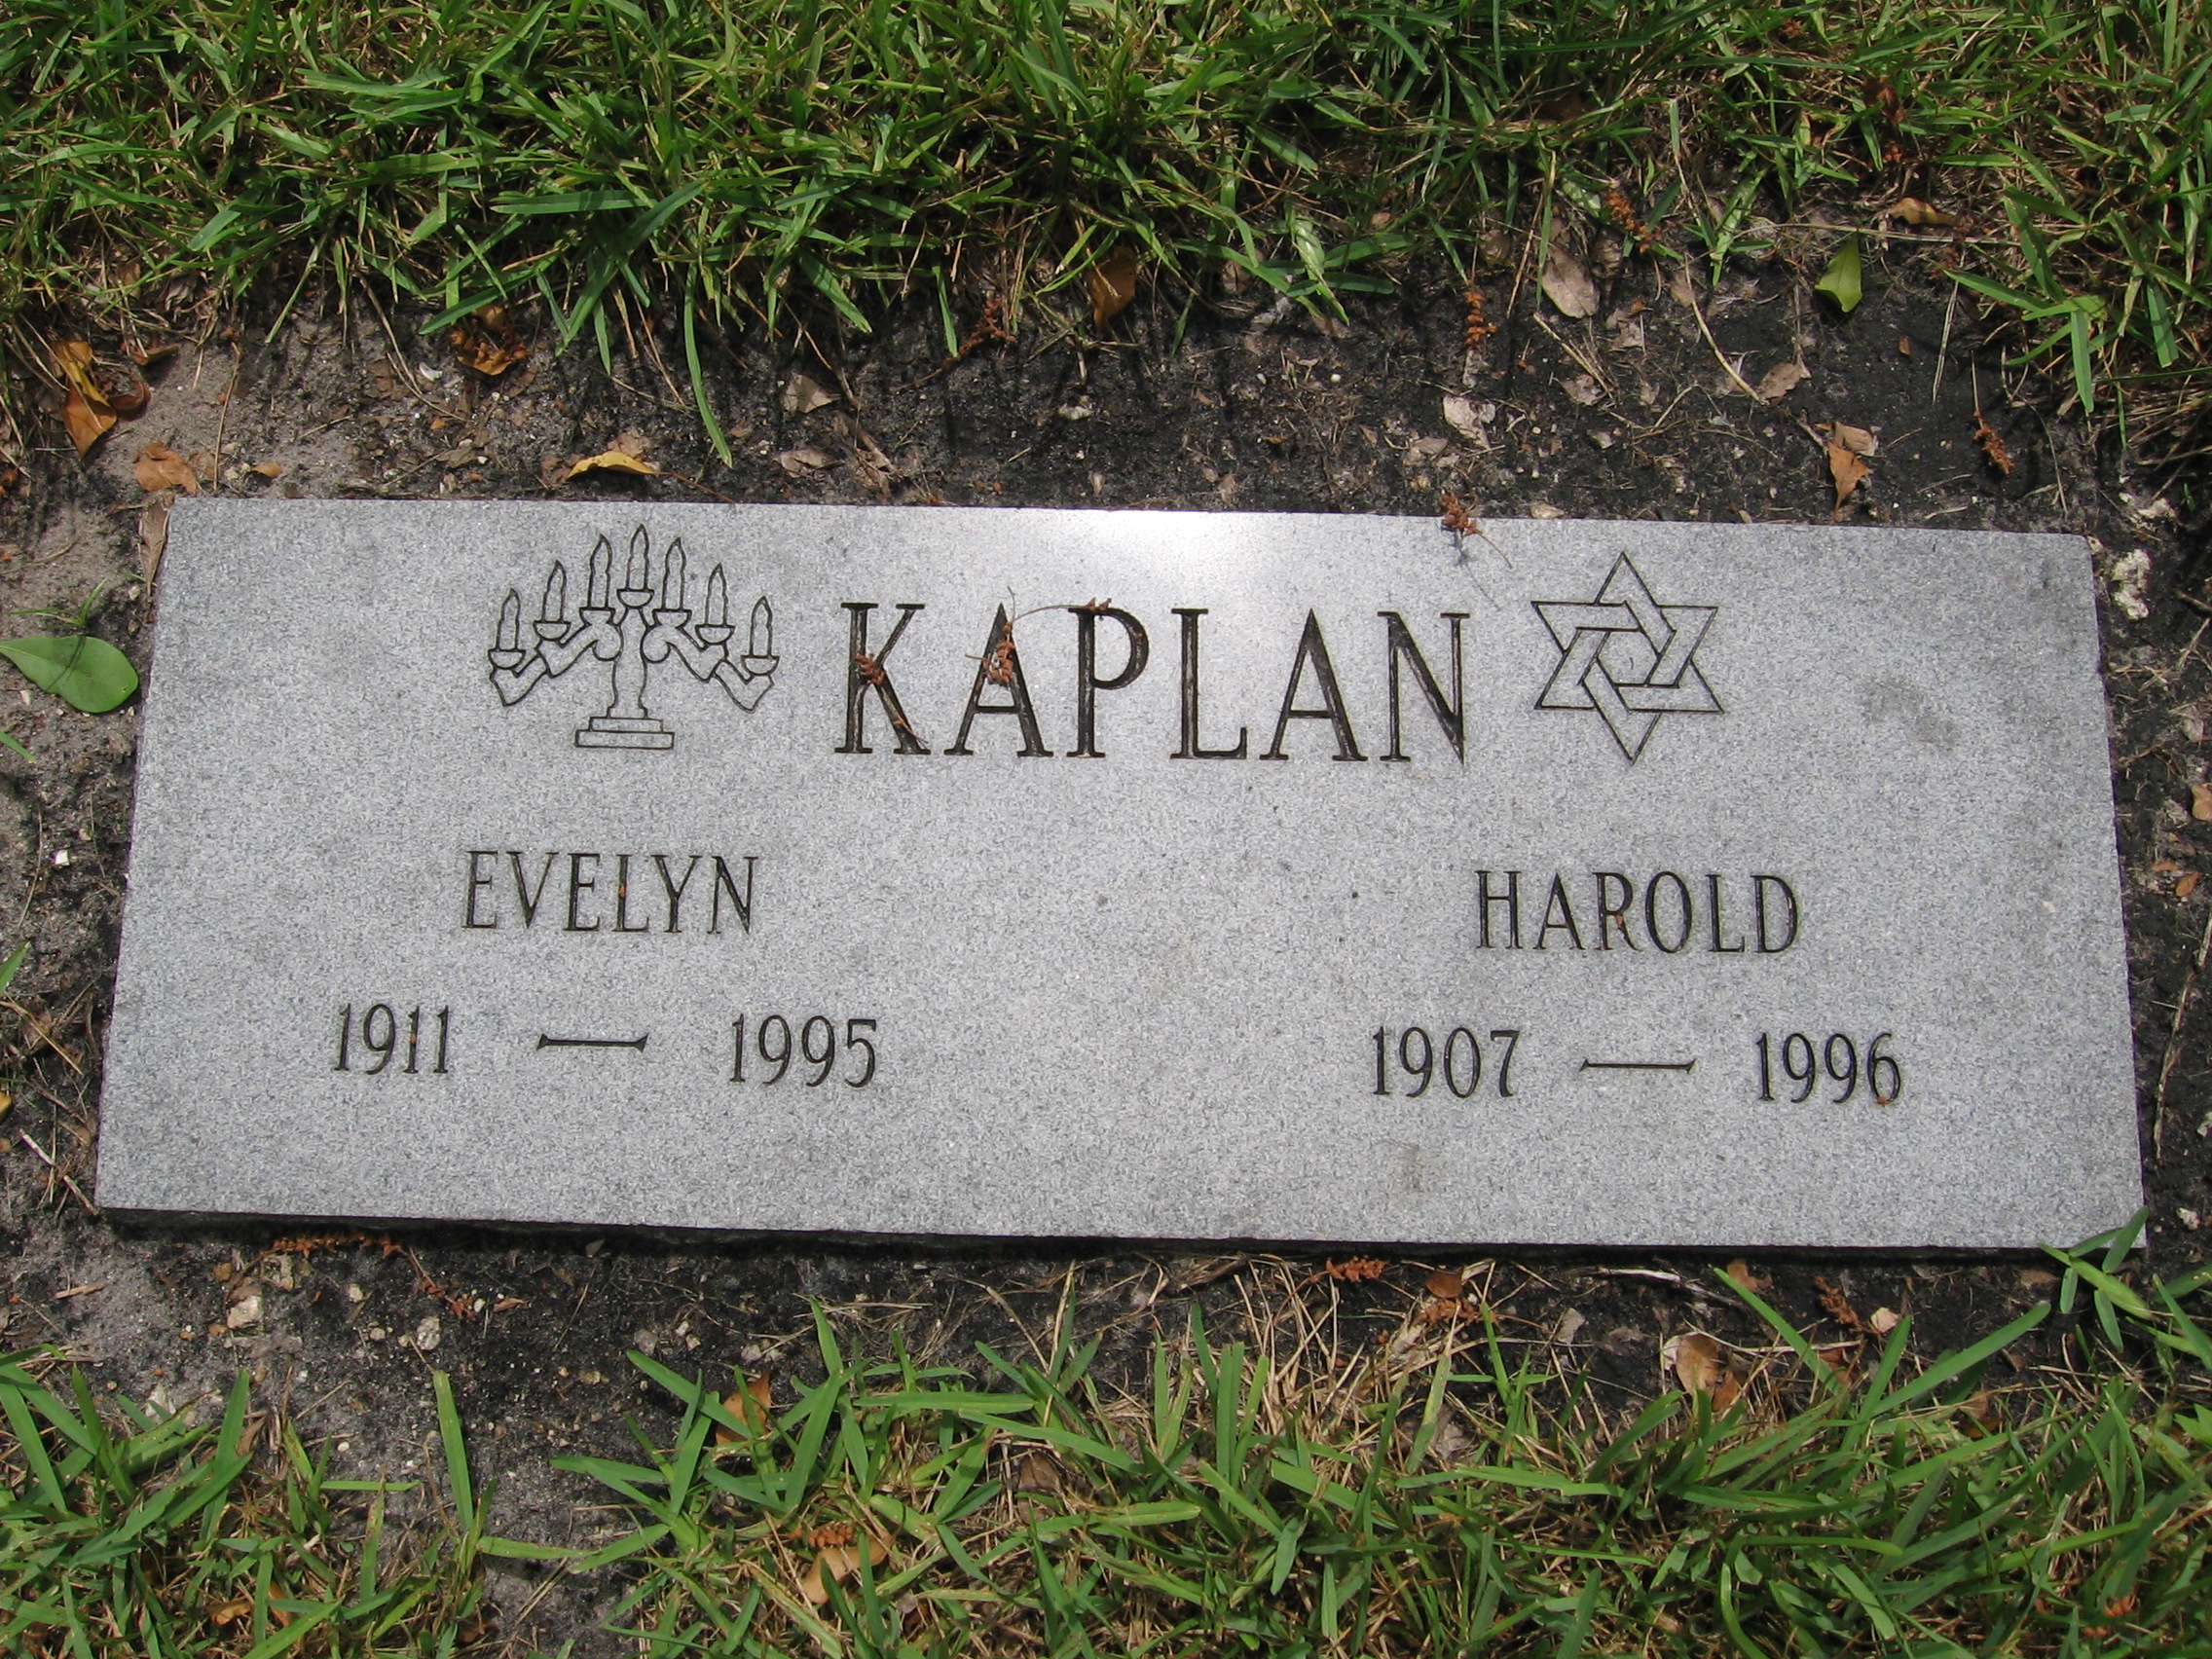 Evelyn Kaplan